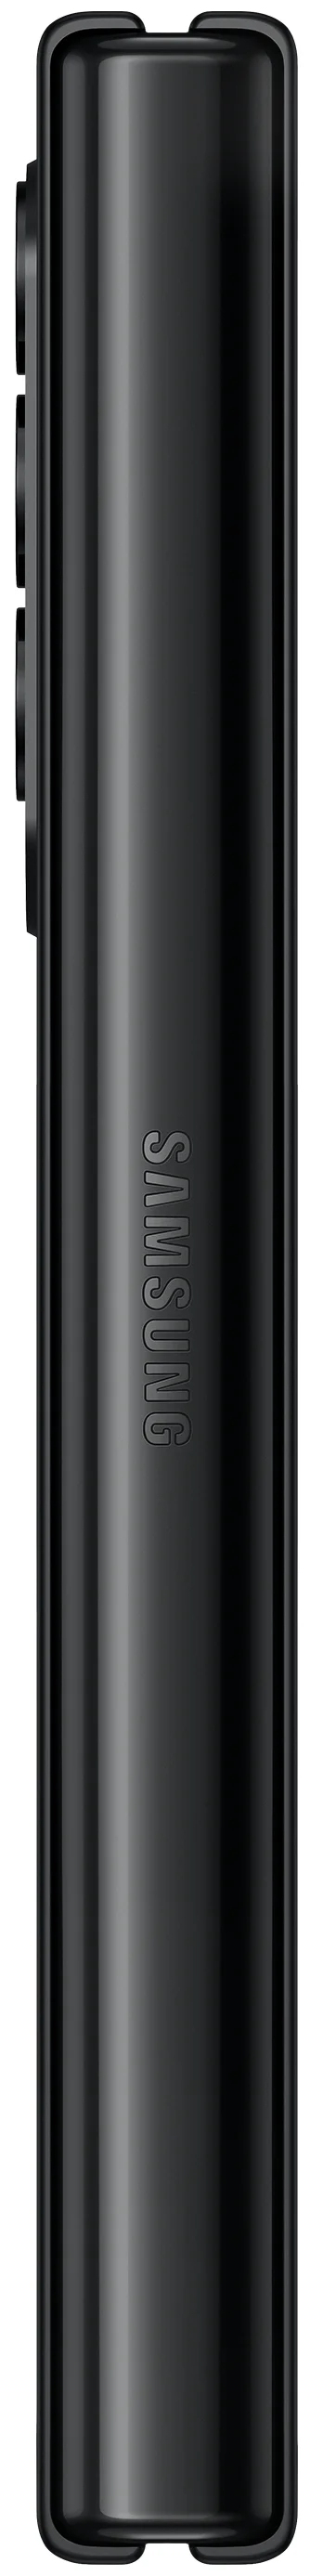 Смартфон Samsung Galaxy Z Fold3 512GB, черный - фото 6